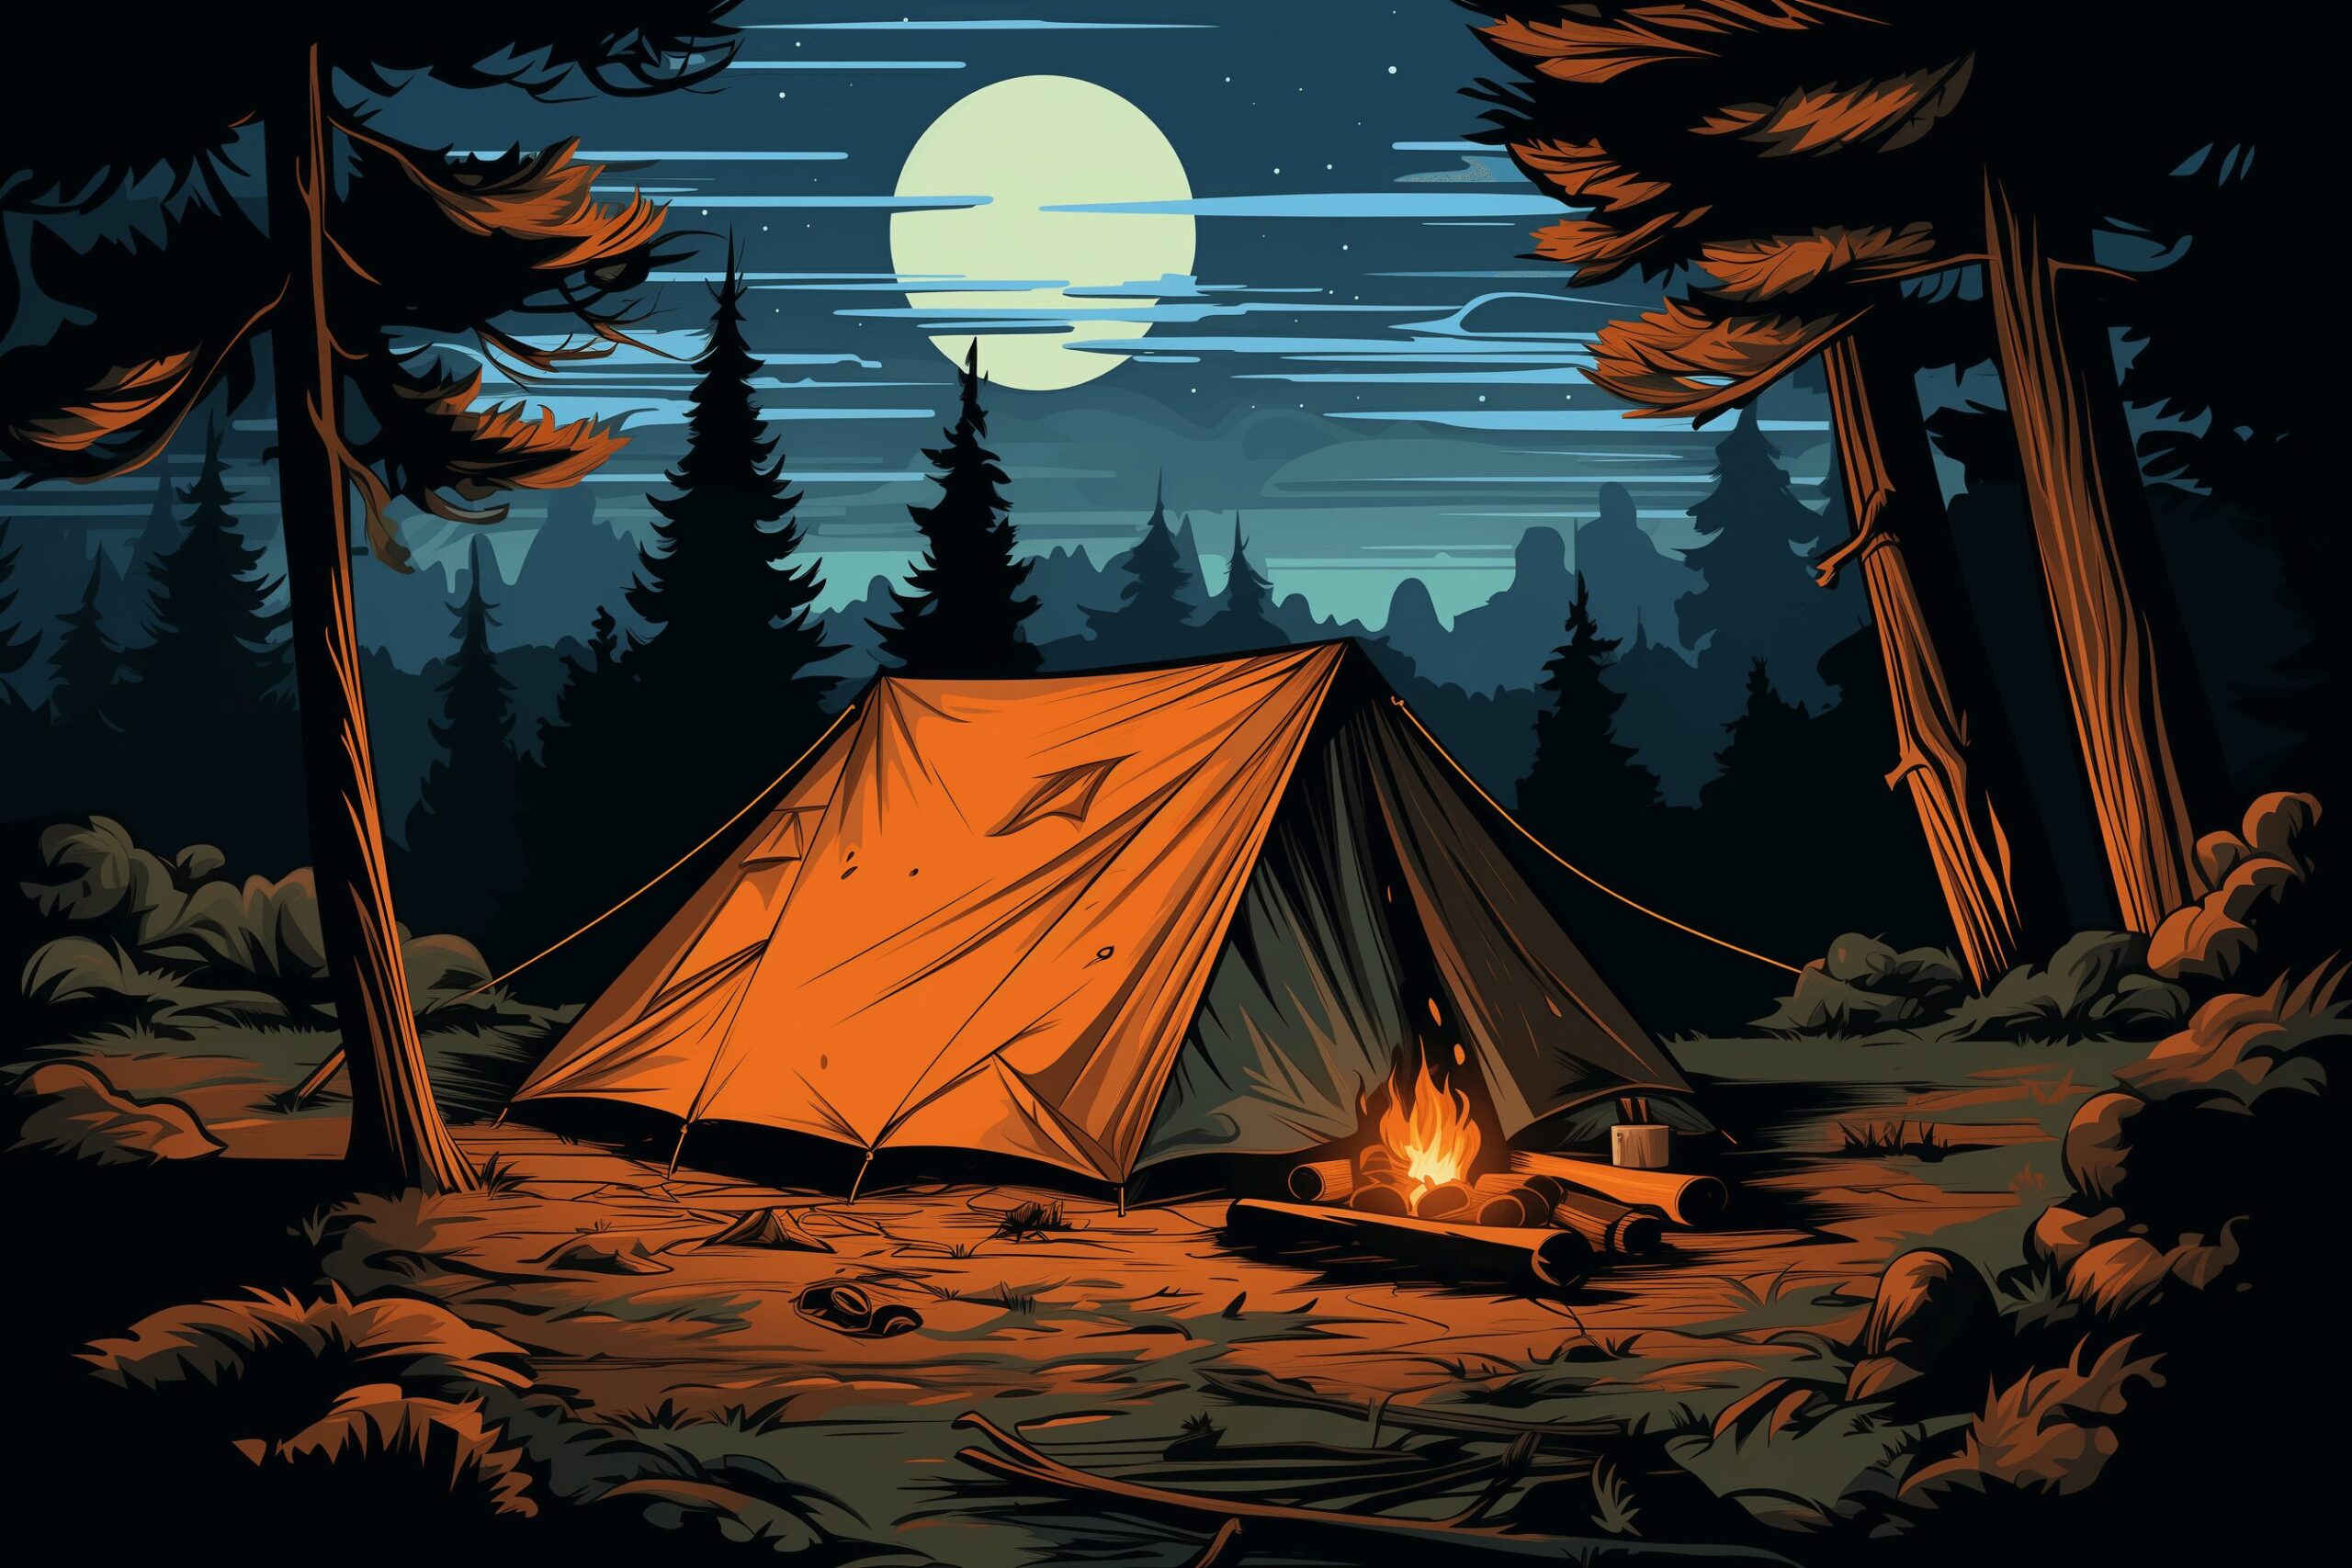 A calm campground